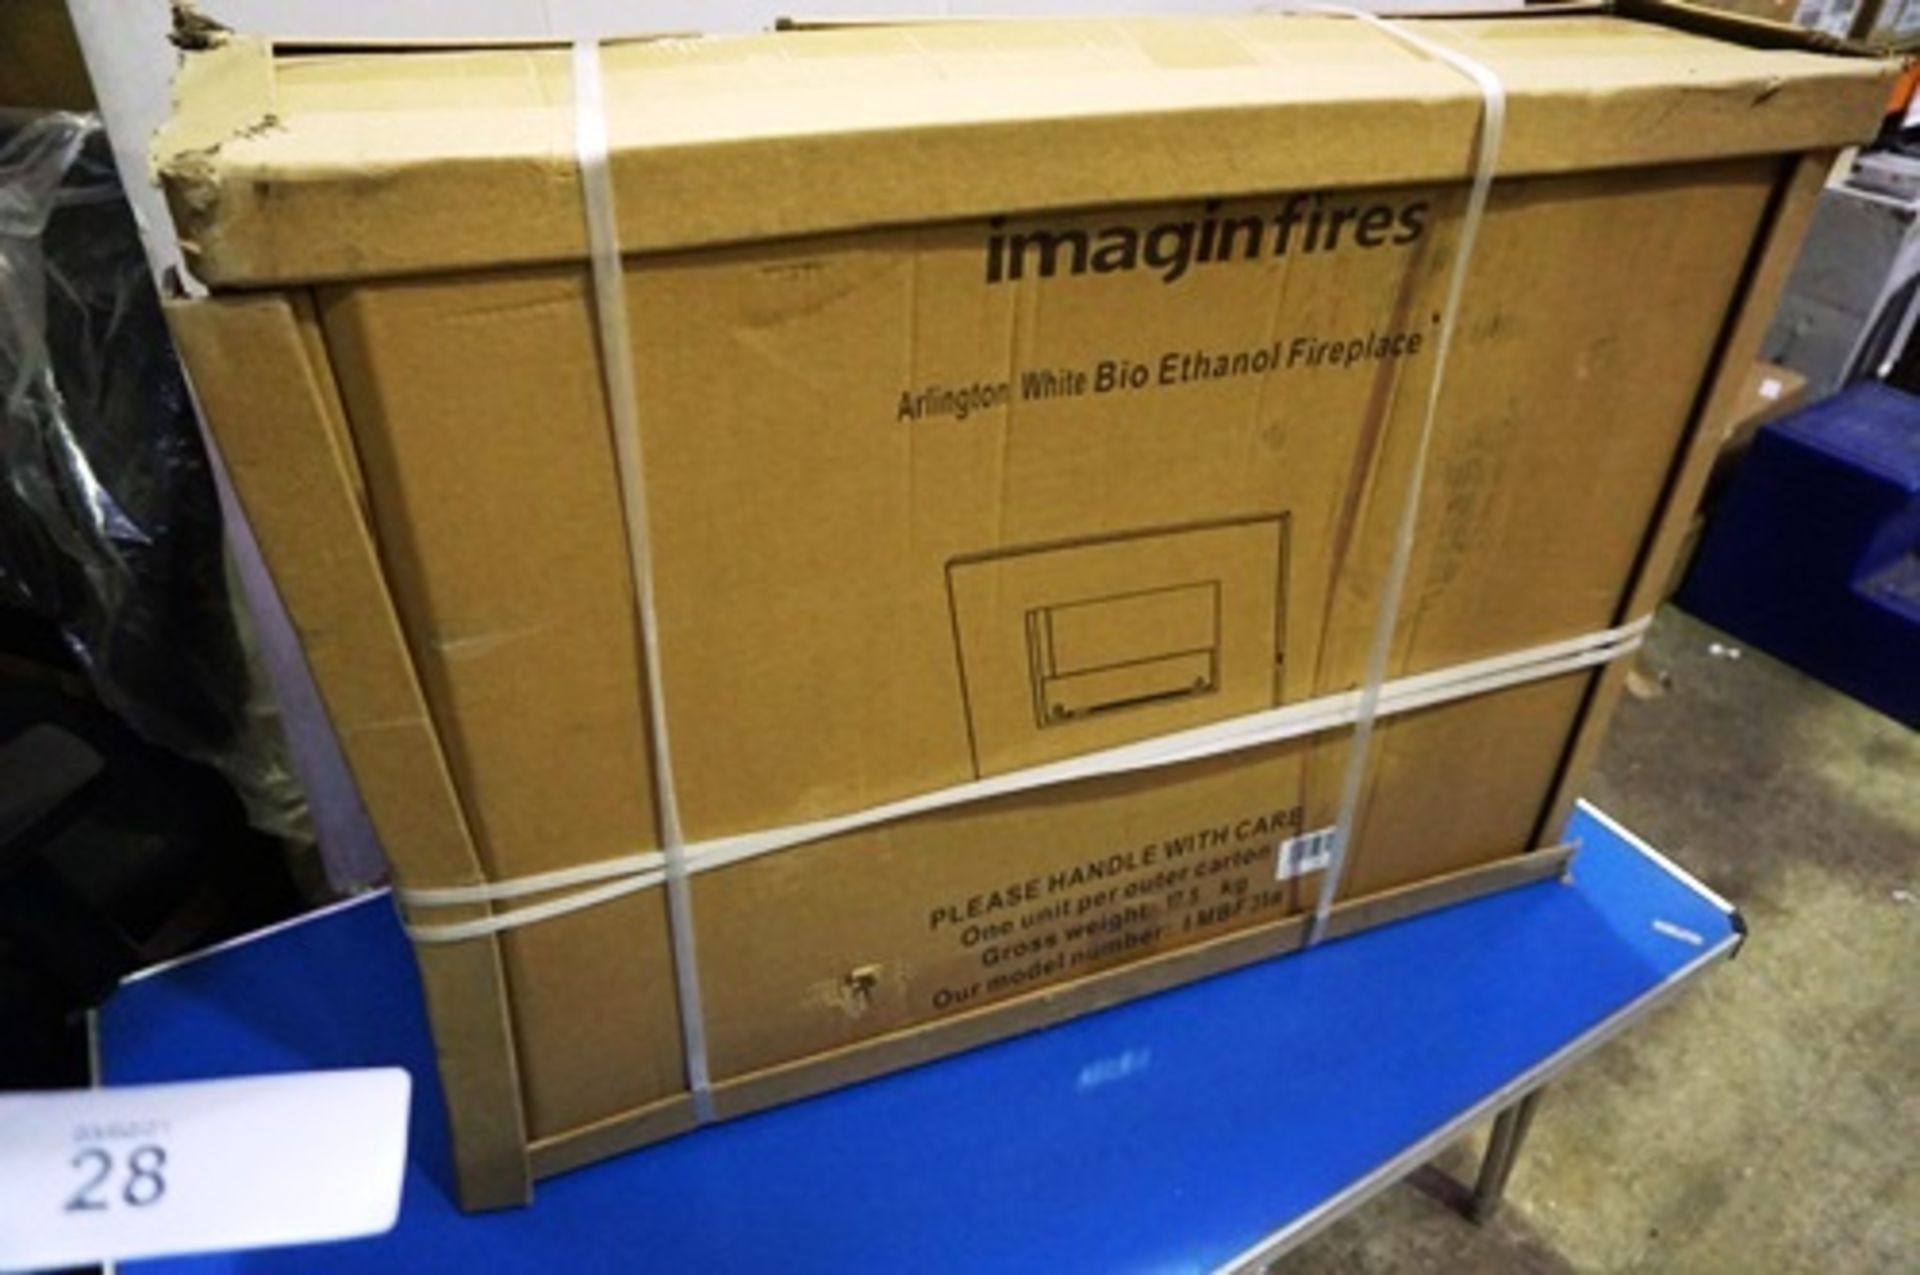 An Imagine Fires Arlington white bio ethanol fireplace, model LMBF35W - Sealed new in box (ES3)